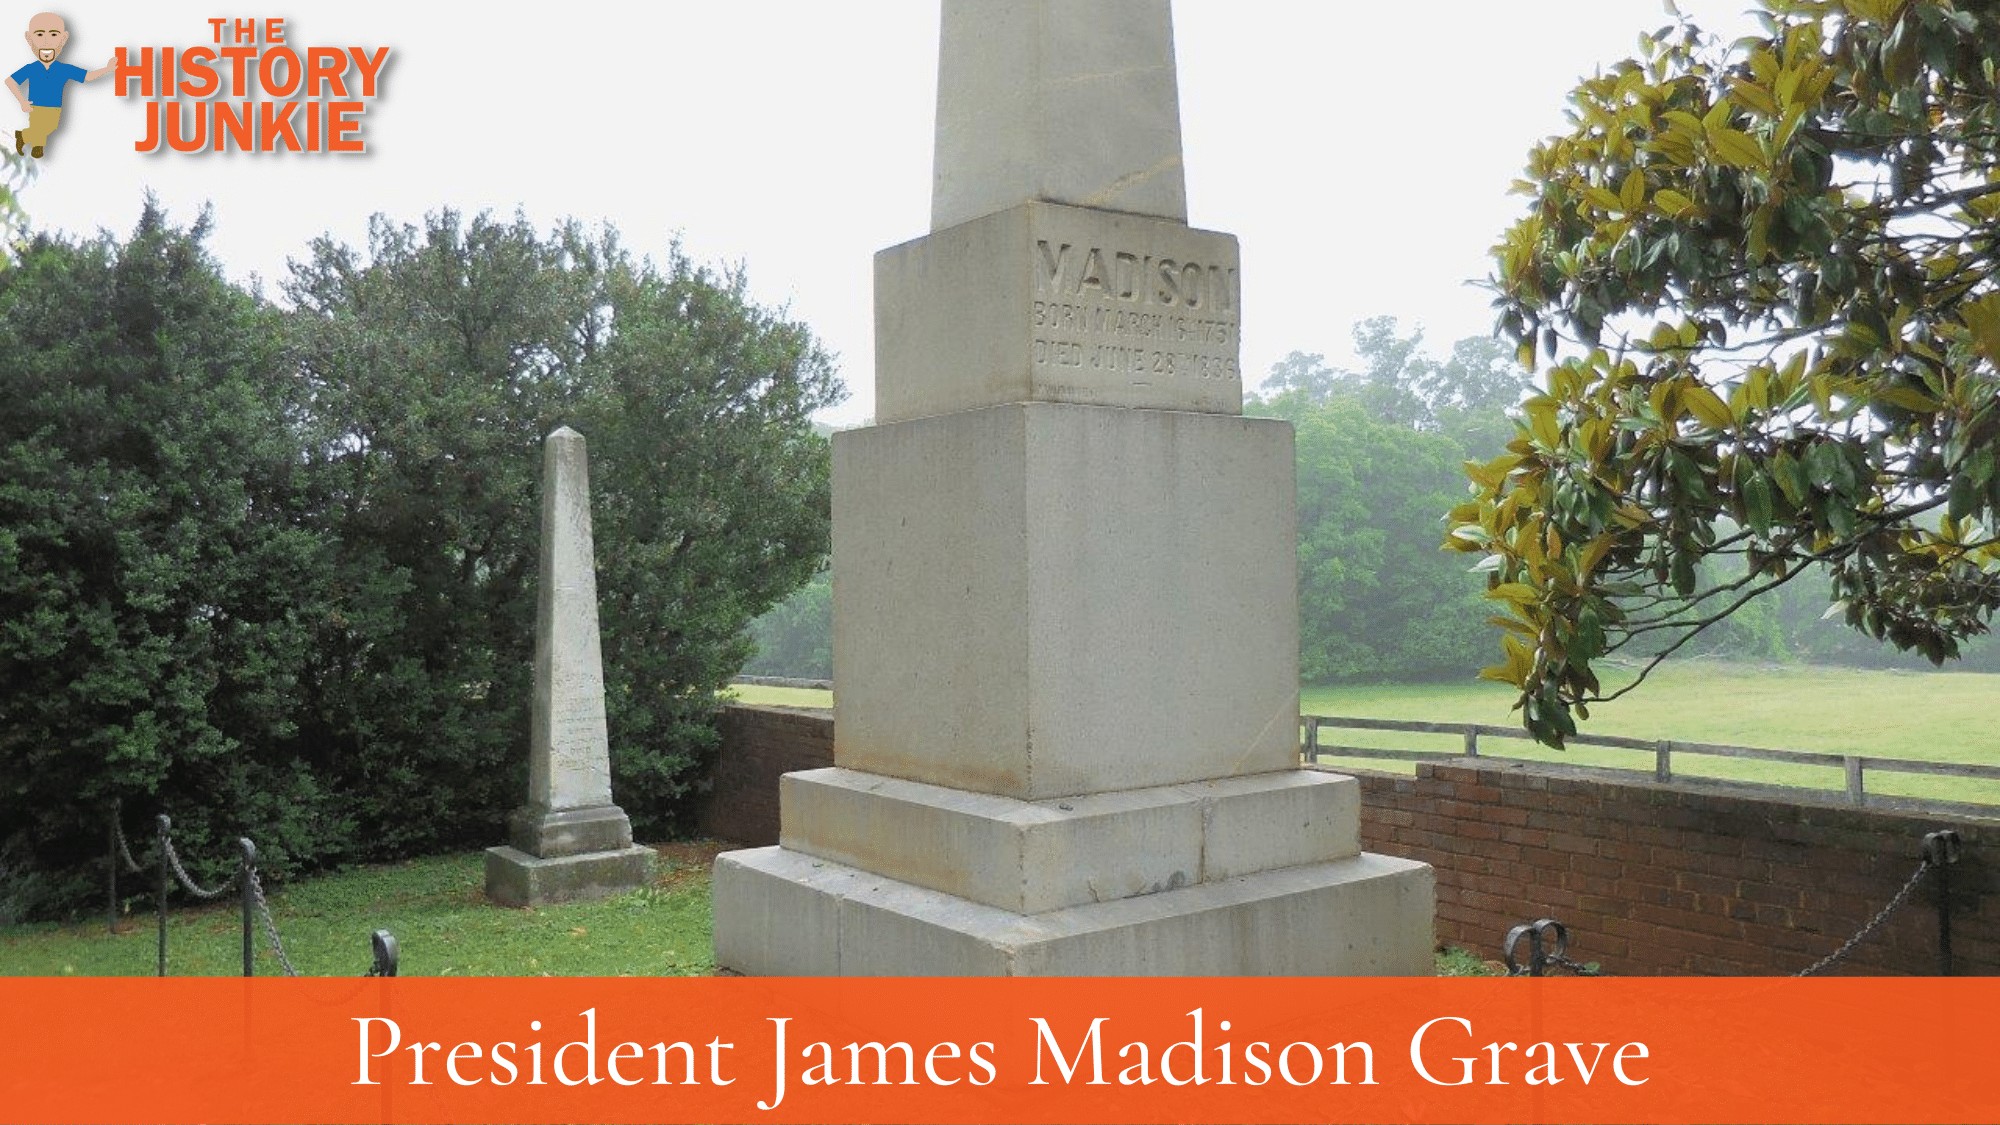 Madison Grave